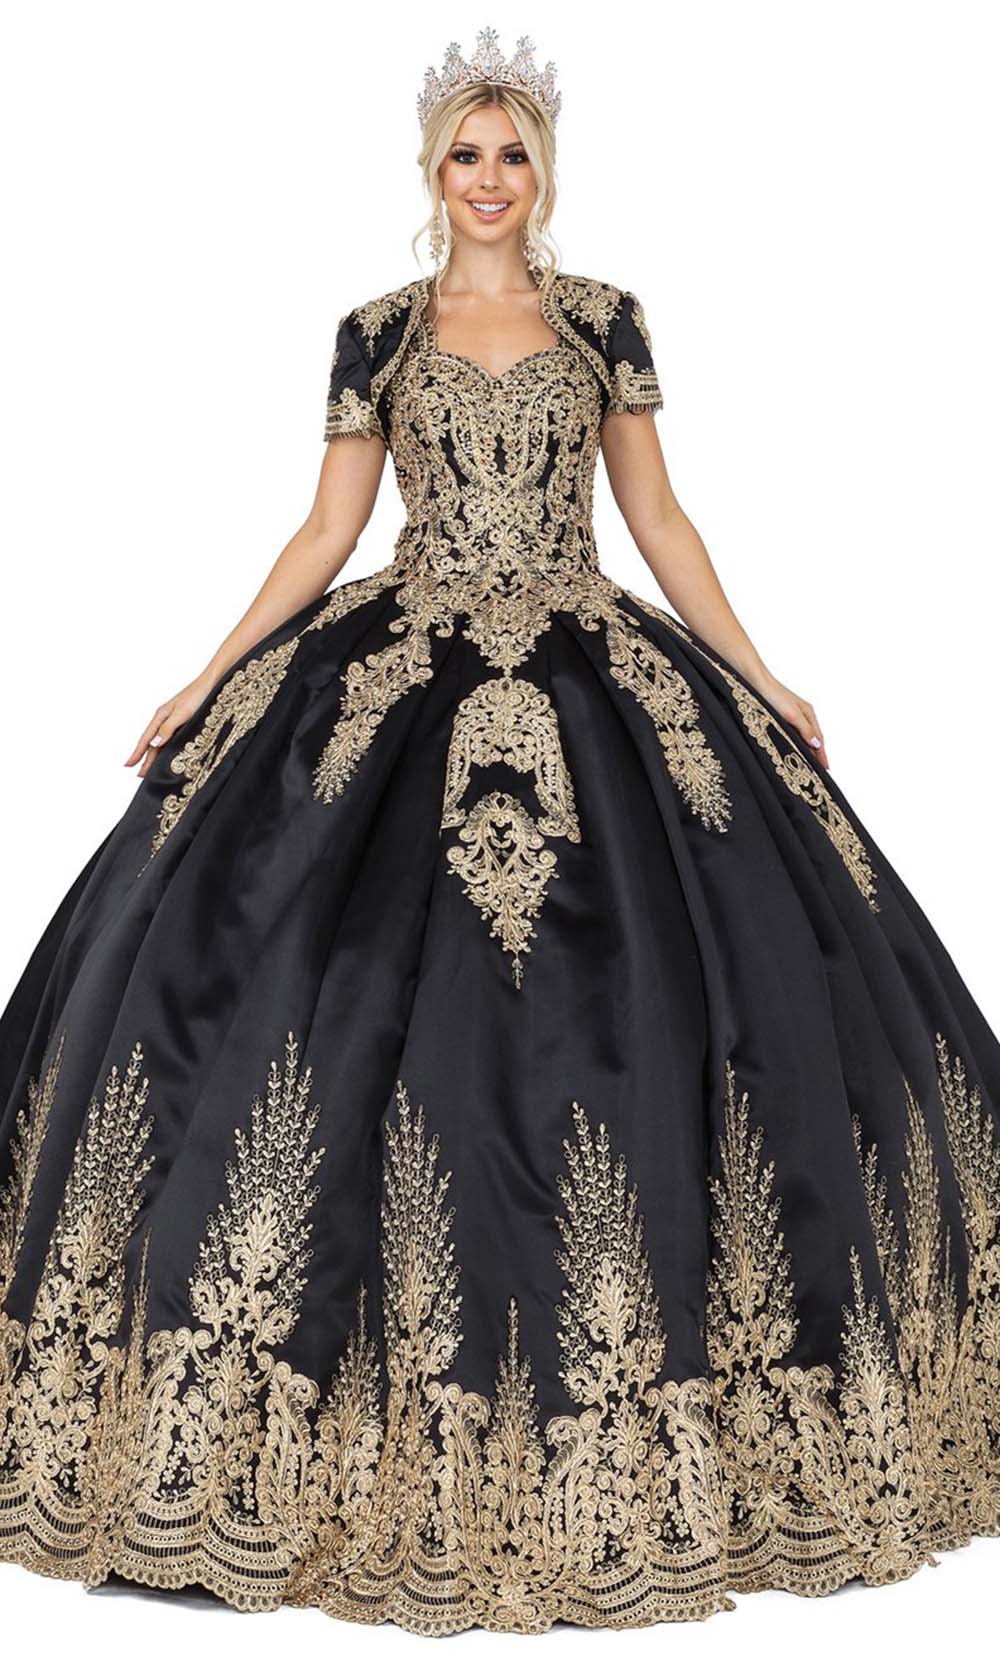 Dancing Queen - 1494 Sweetheart Neckline Lace Applique Ballgown In Black